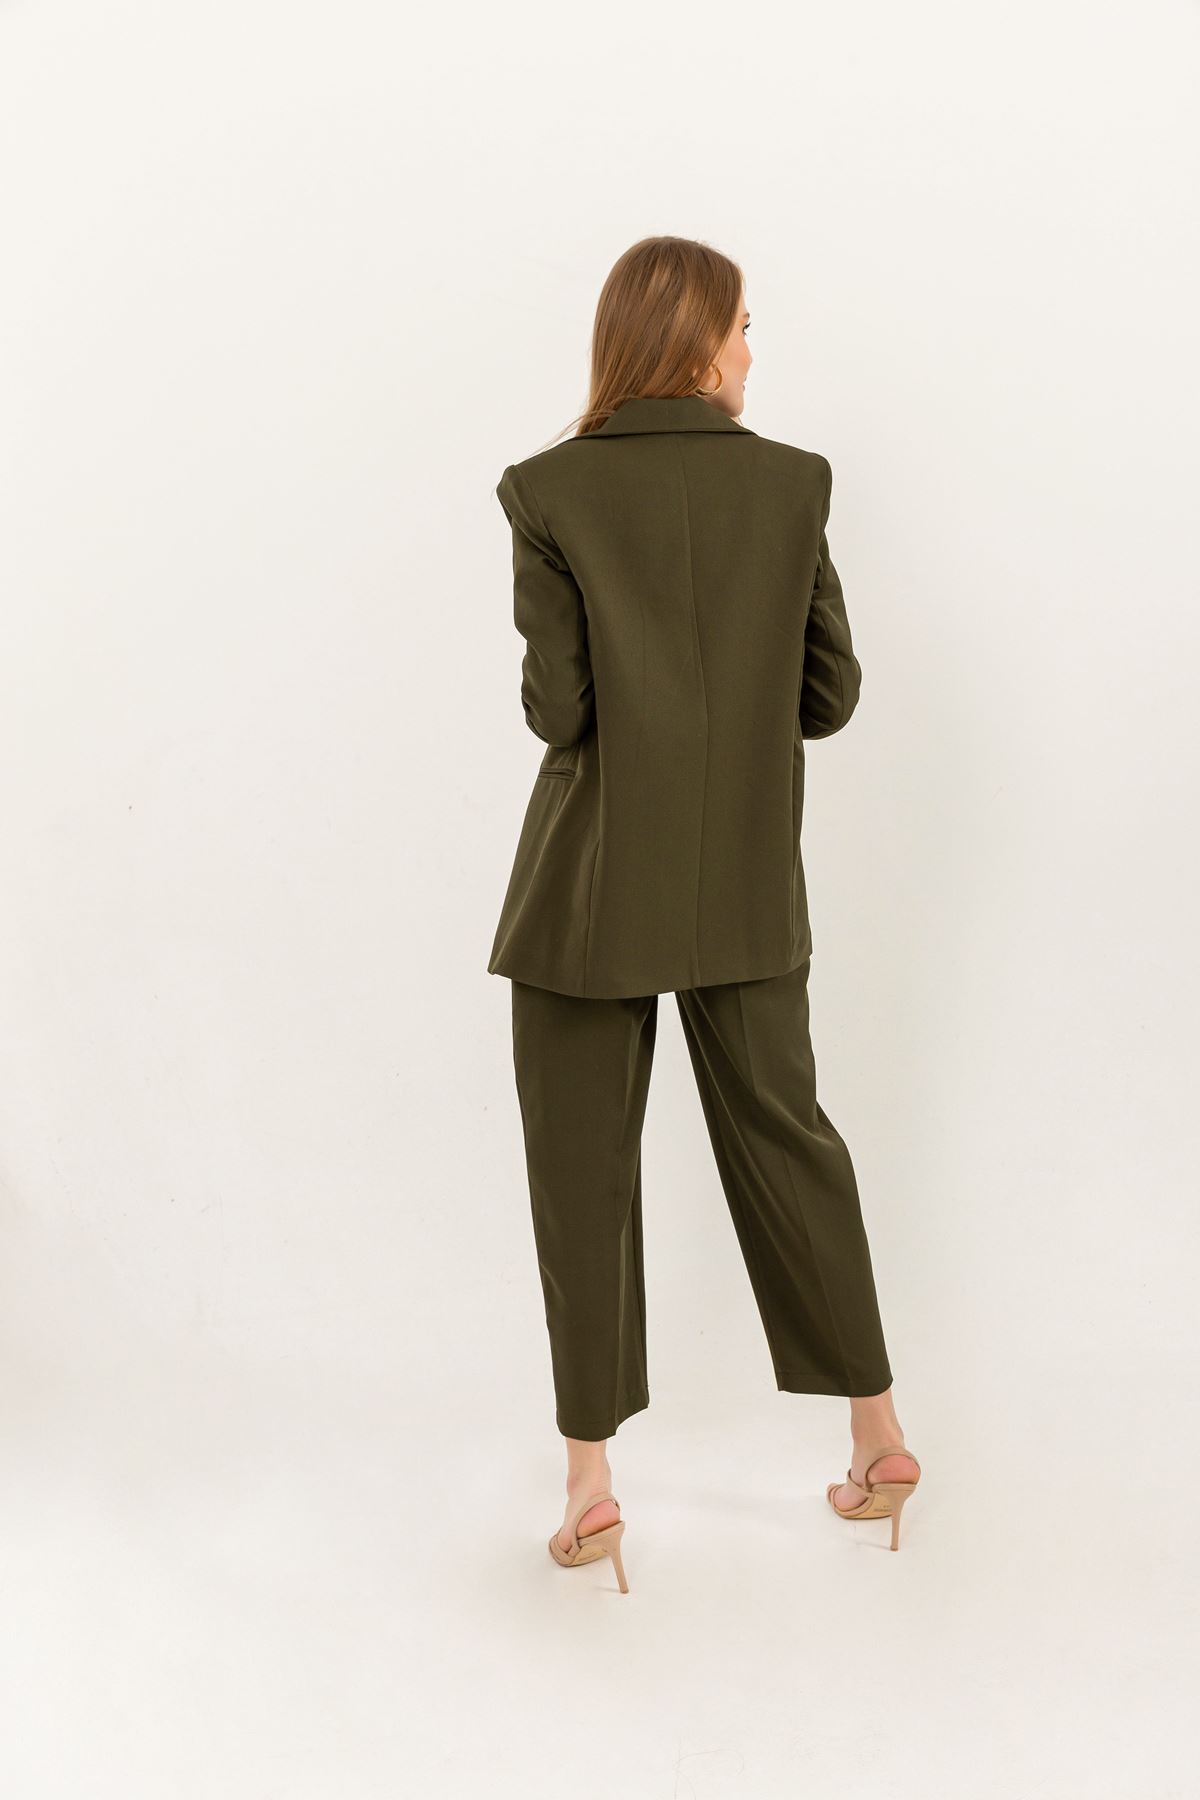 Atlas Fabric Long Sleeve Oversize Women Jacket-Khaki 